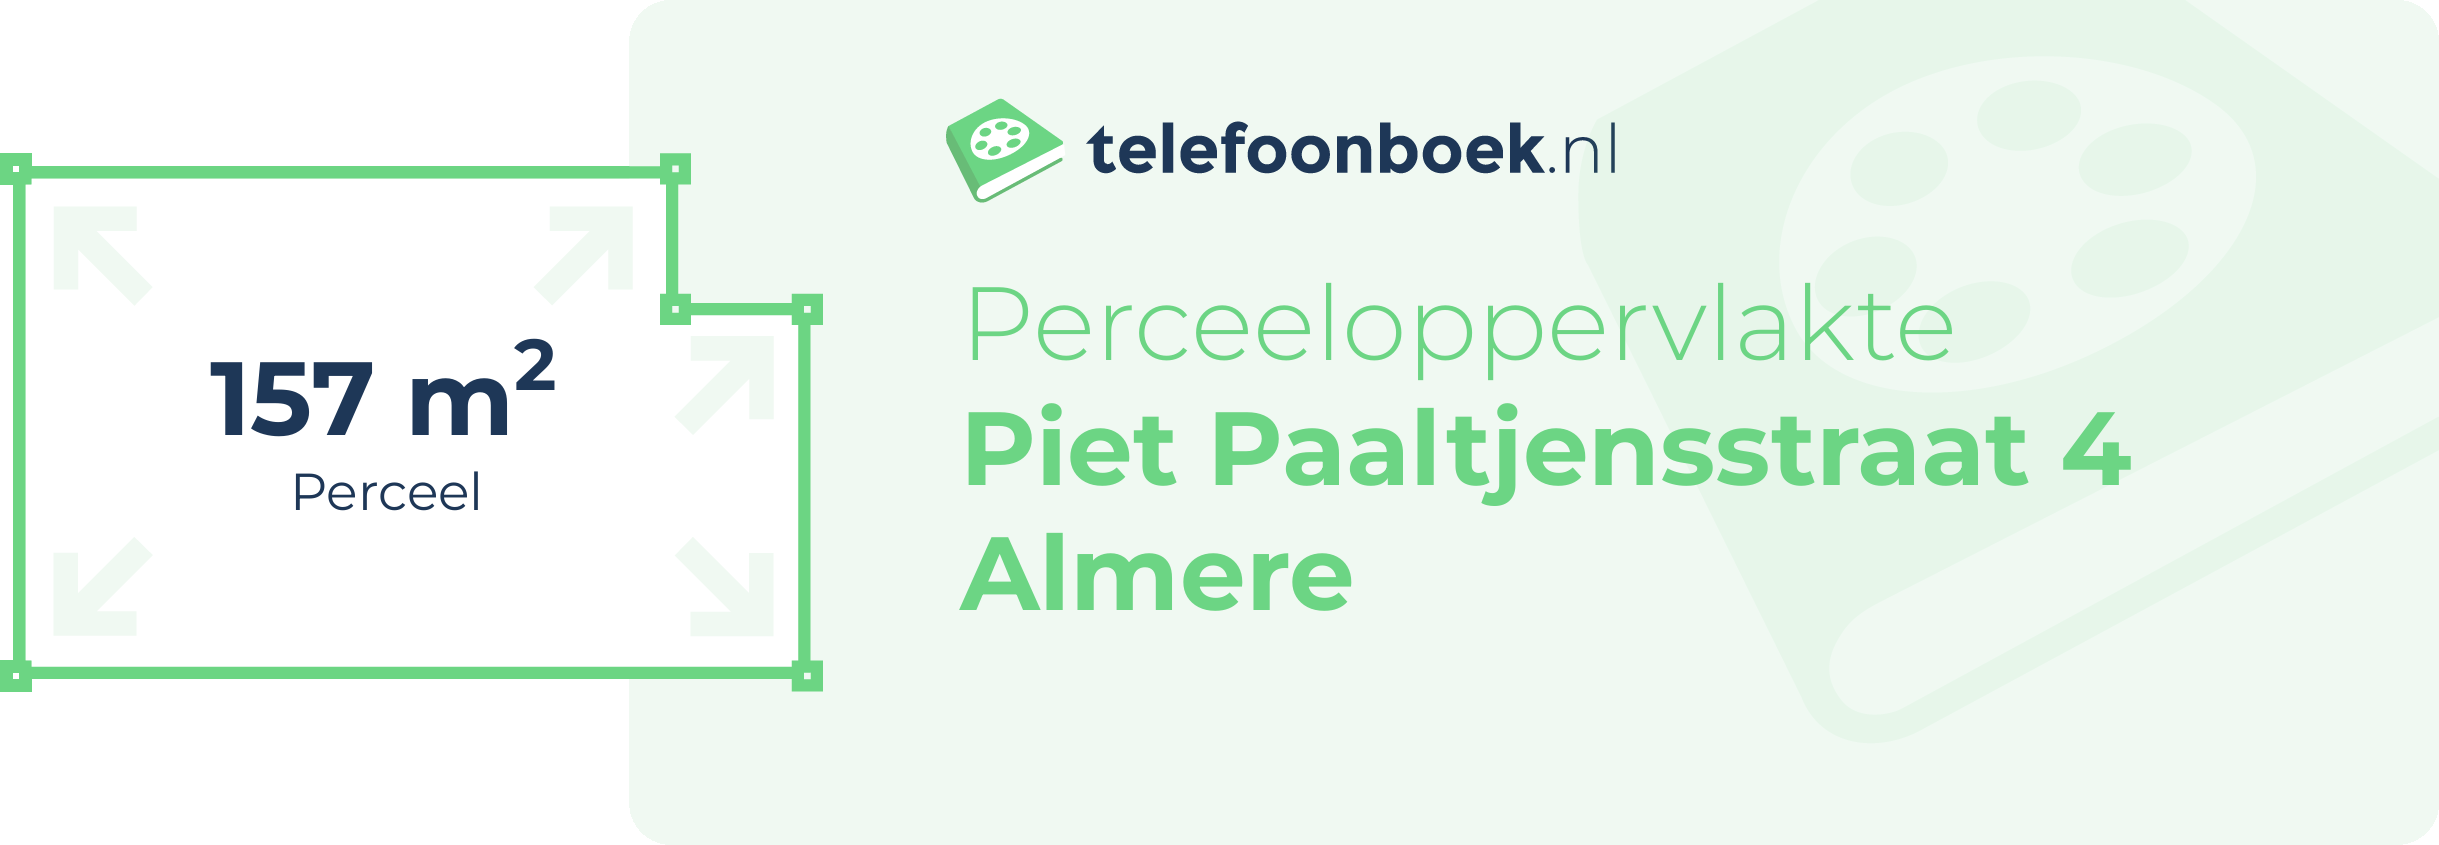 Perceeloppervlakte Piet Paaltjensstraat 4 Almere